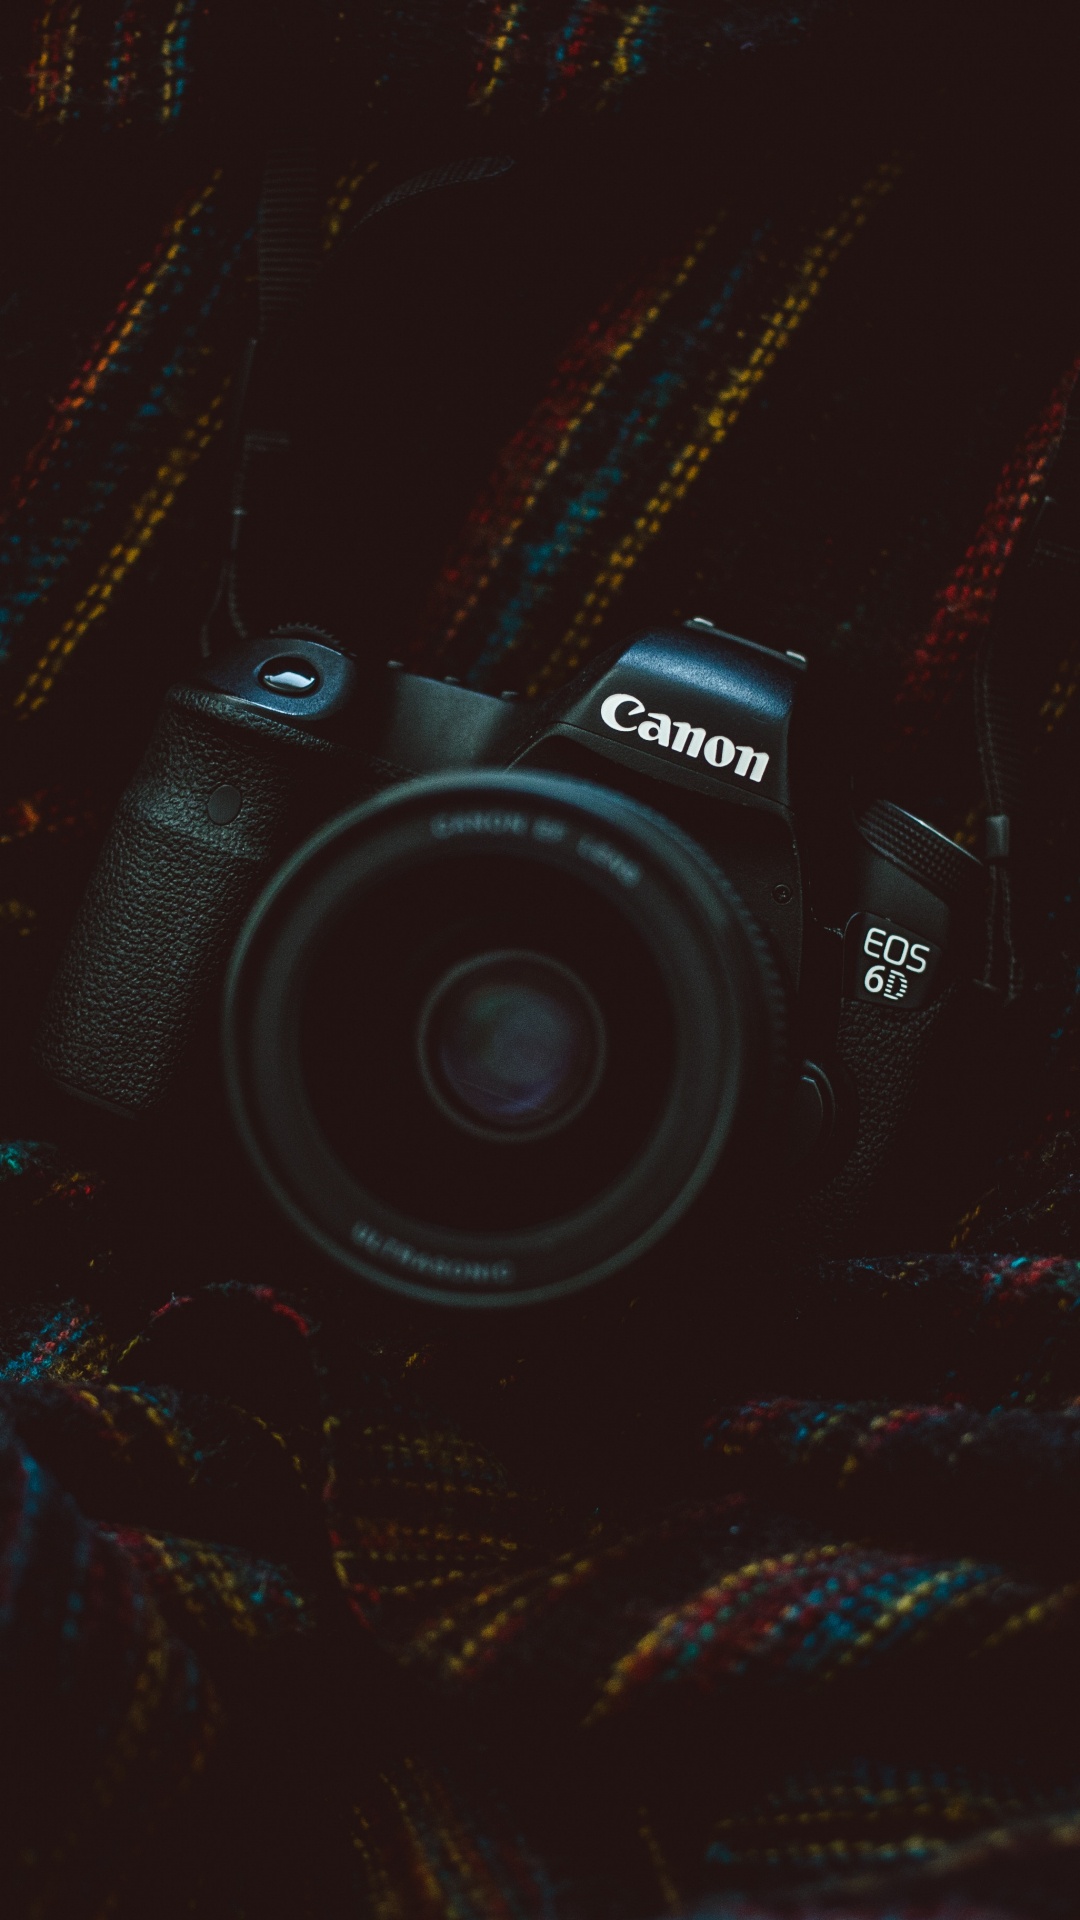 Black Nikon Dslr Camera on Black and Brown Textile. Wallpaper in 1080x1920 Resolution